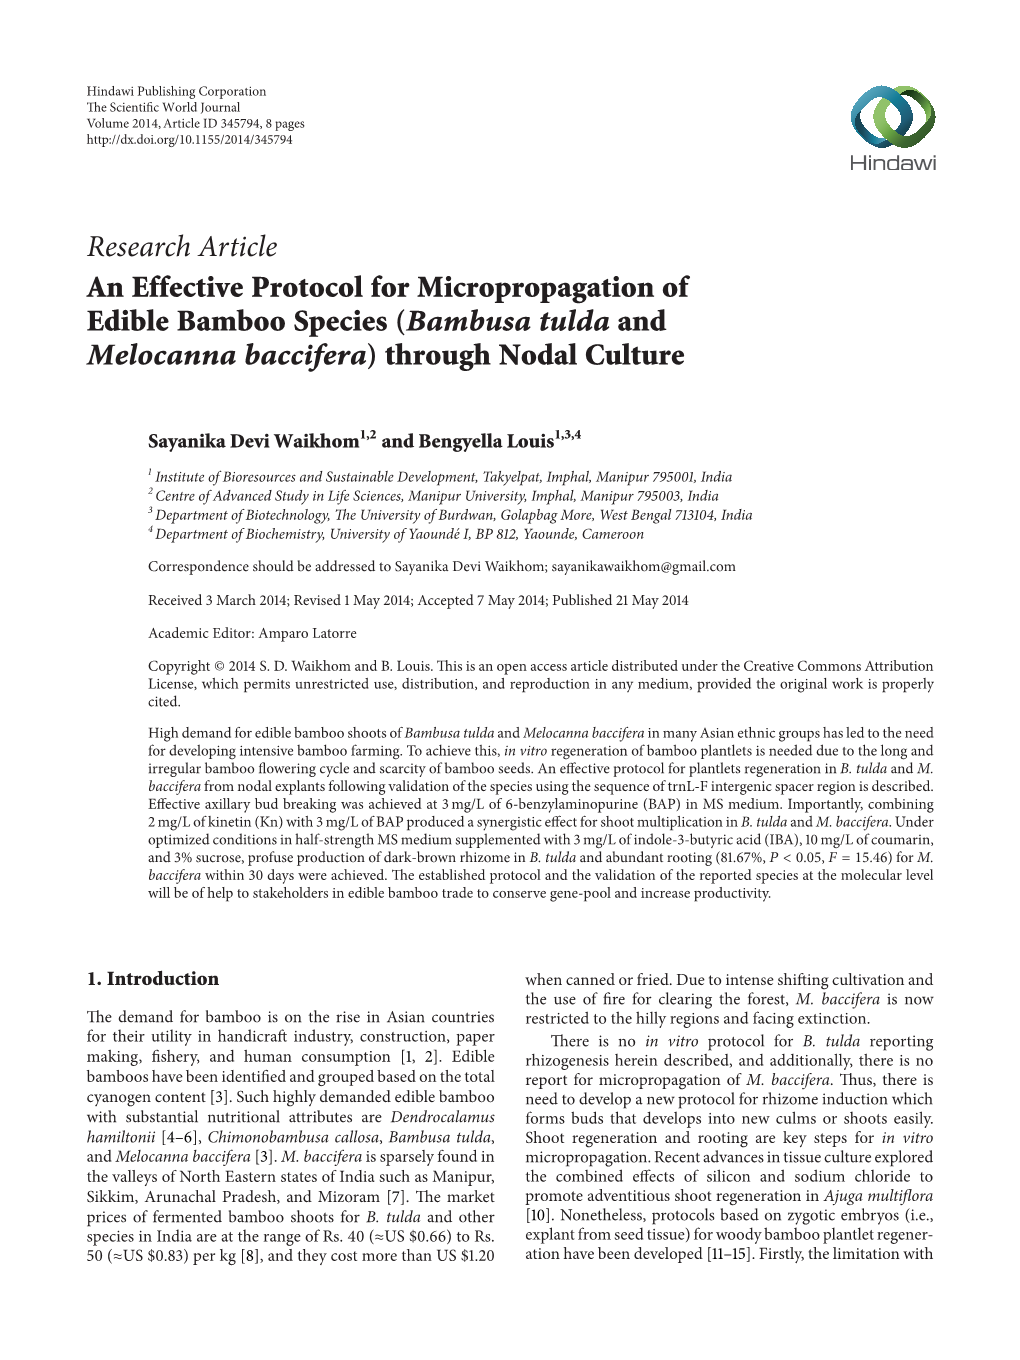 An Effective Protocol for Micropropagation of Edible Bamboo Species (Bambusa Tulda and Melocanna Baccifera) Through Nodal Culture